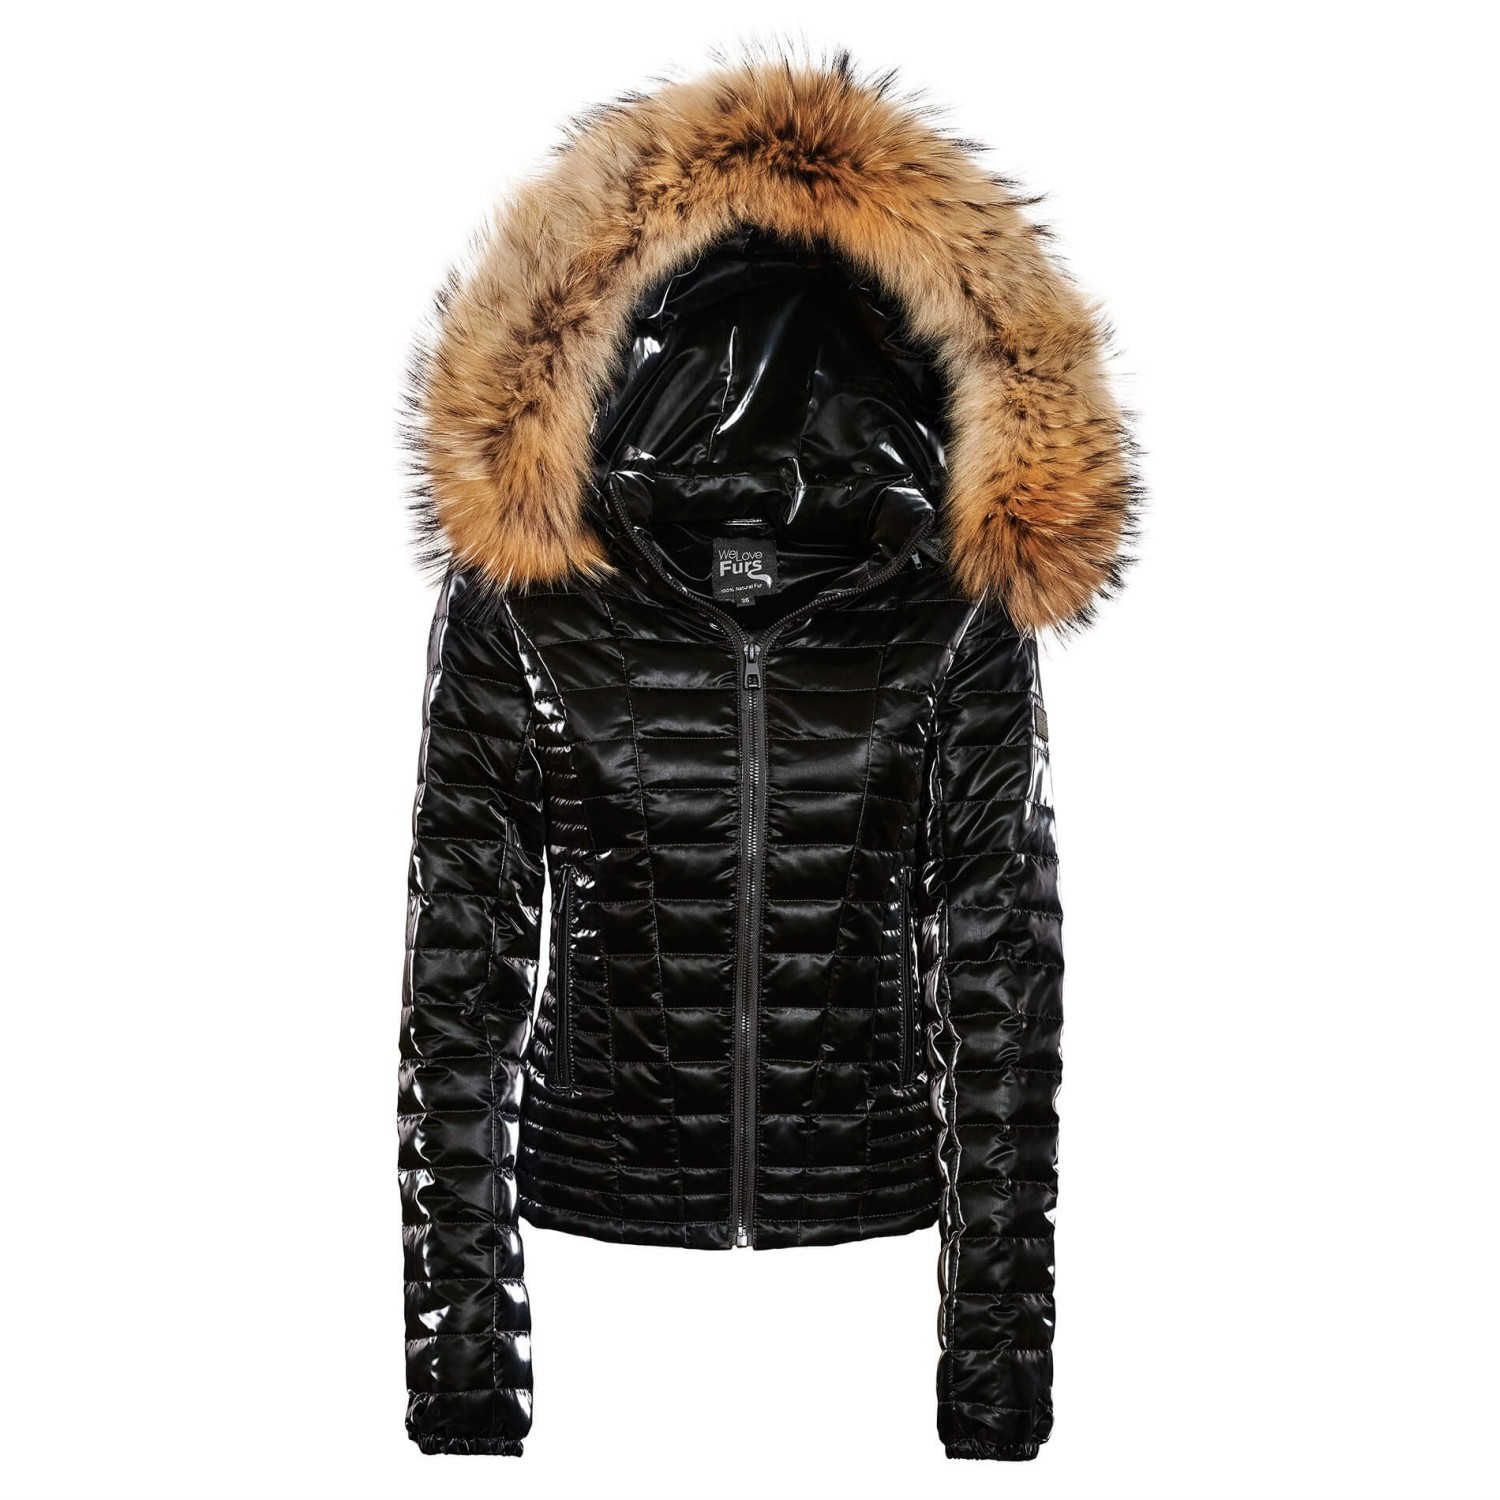 Fur hooded jacket